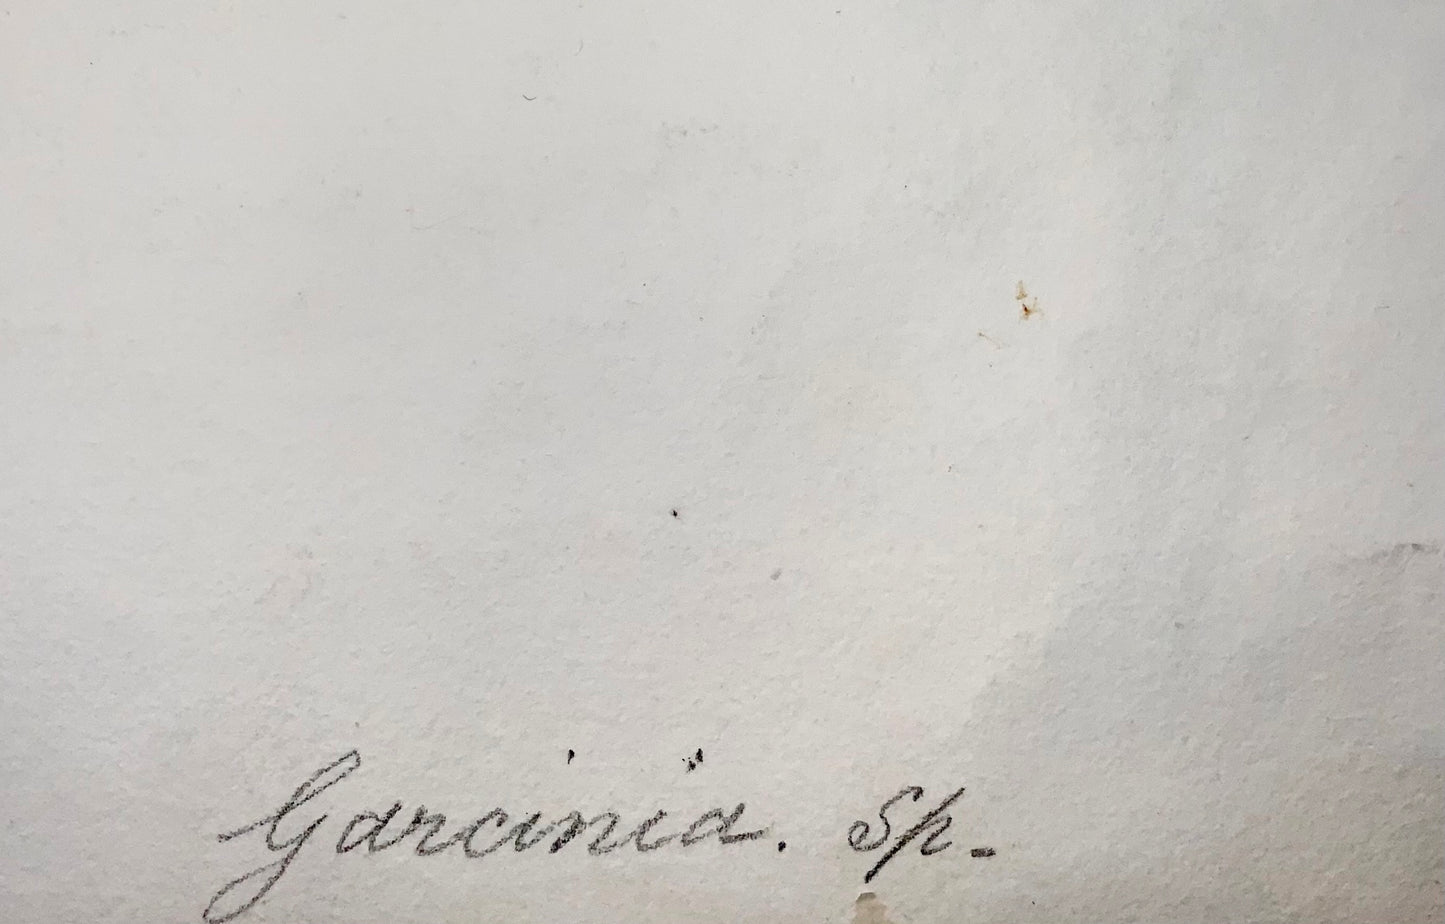 1810 c German School, Garcinia, Saptree, Monkey Fruit, 58cm, botanical gouache